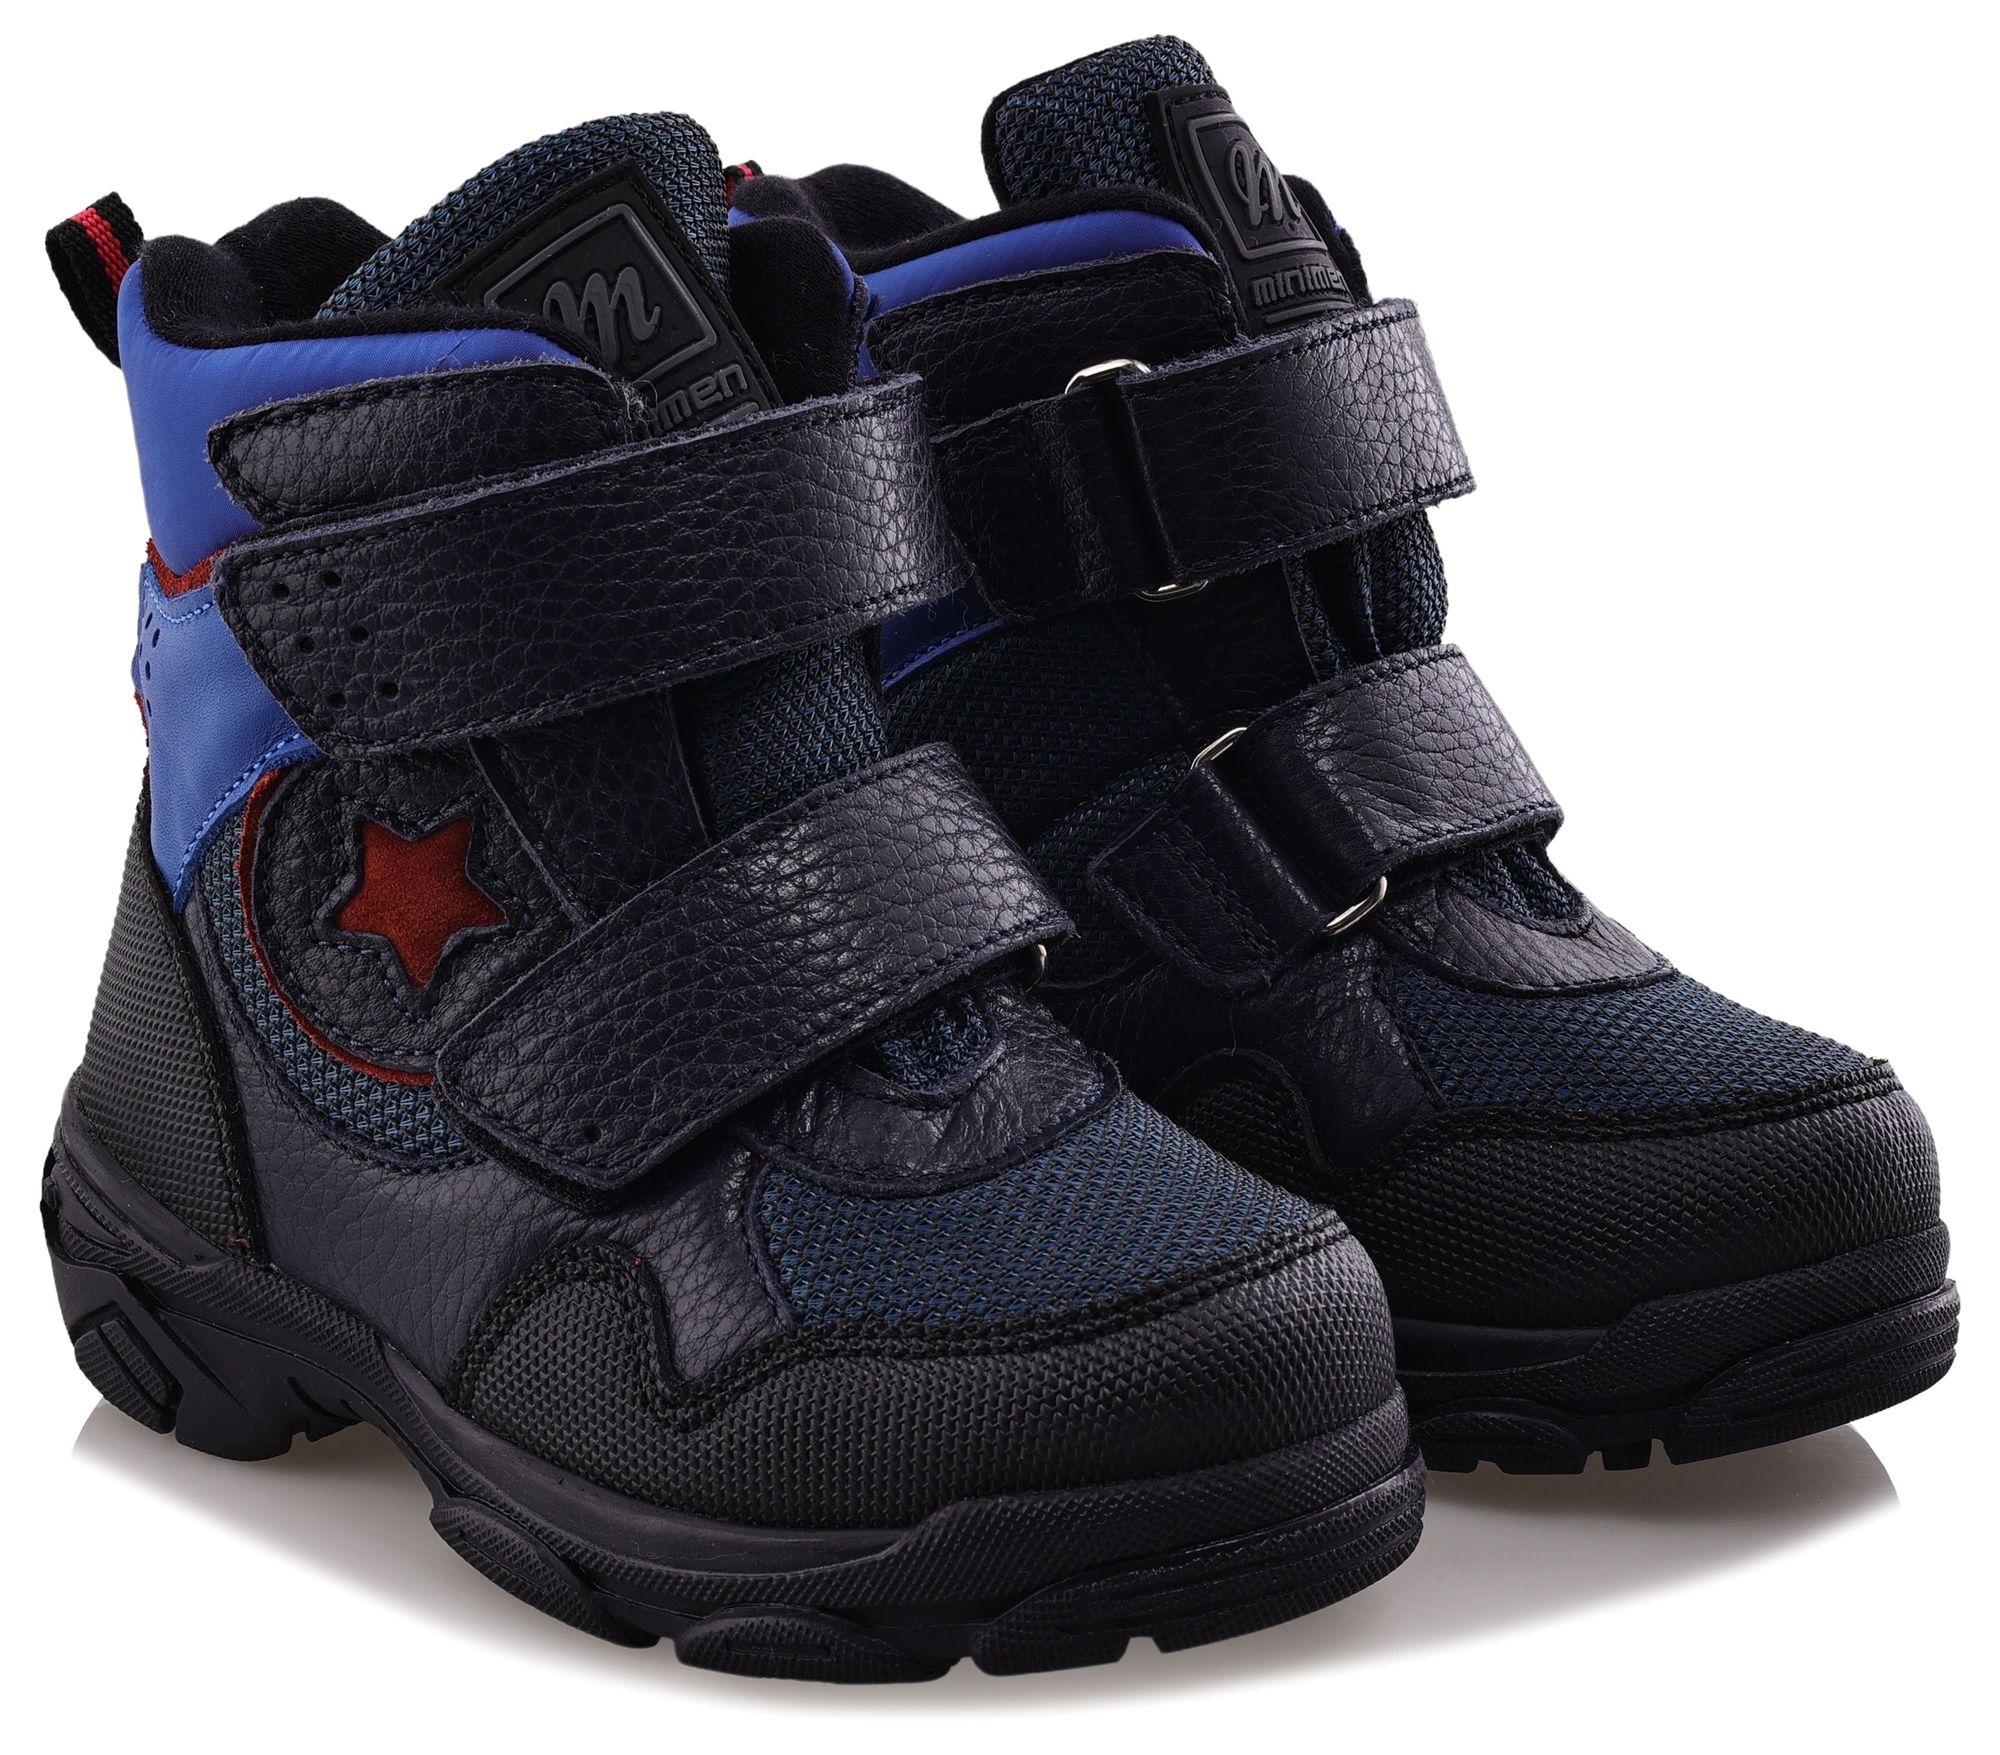 Ботинки Minimen для мальчиков, тёмно-синие, размер 23, 2658-52-23B-01 ботинки minimen для девочек сиреневые размер 30 2658 63 23b 04